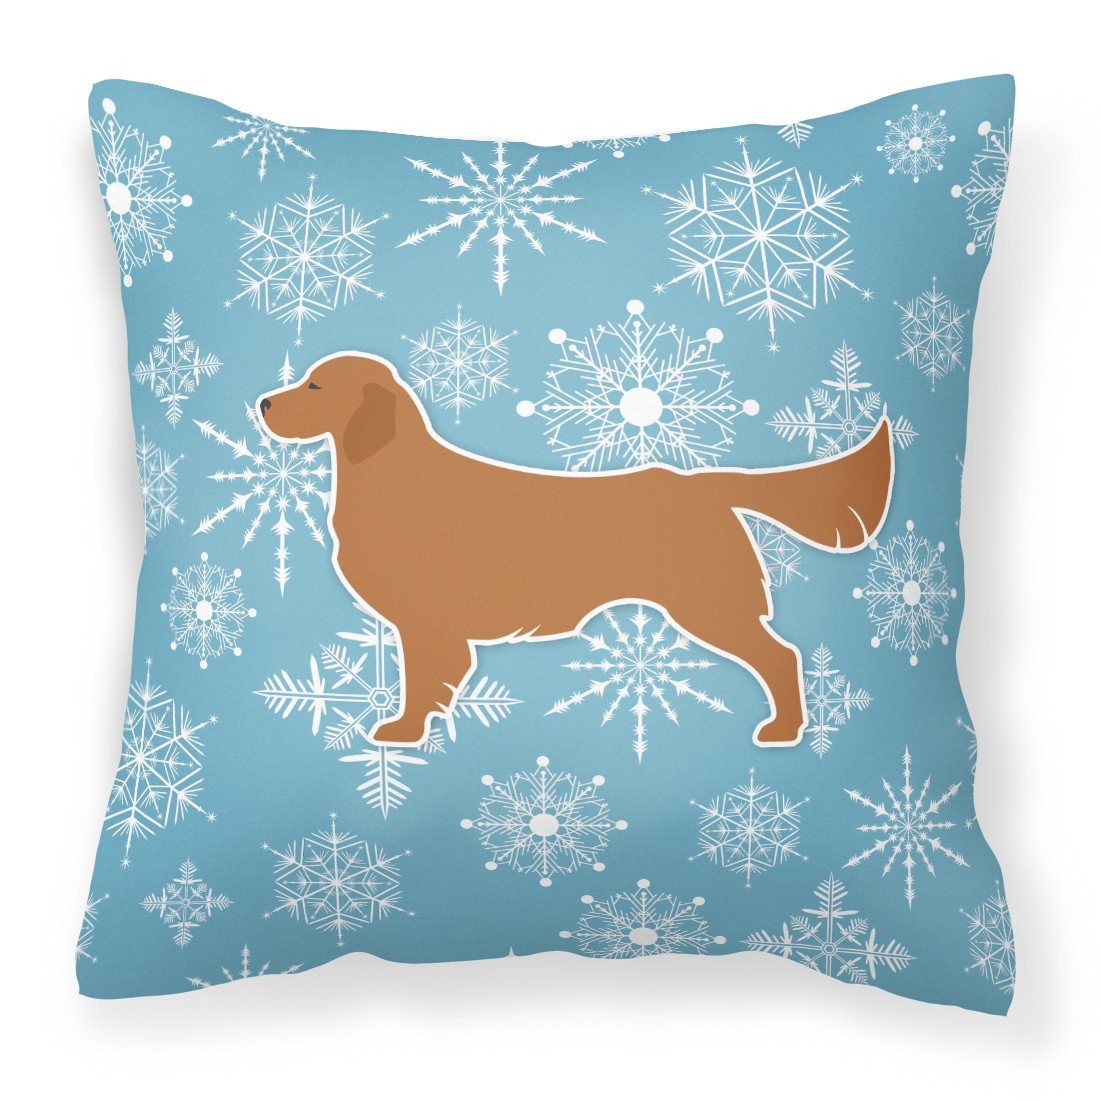 Winter Snowflake Golden Retriever Fabric Decorative Pillow BB3504PW1818 by Caroline's Treasures